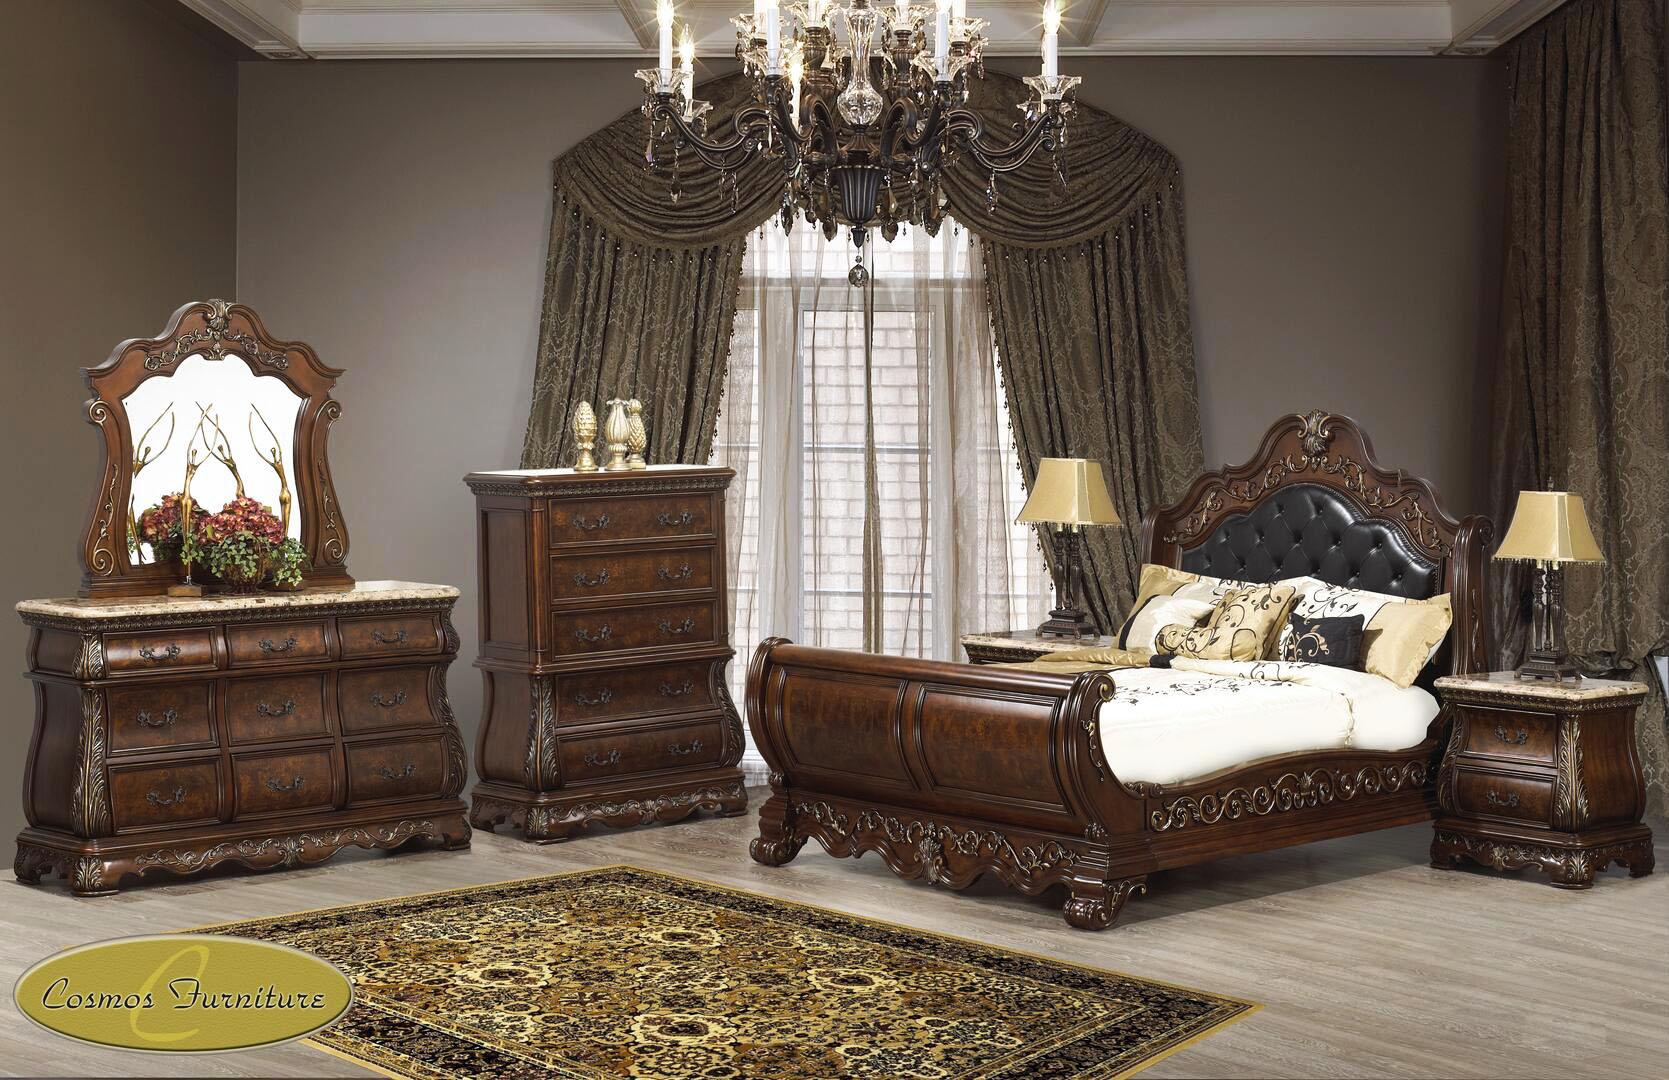 Cosmos Furniture Cleopatra Sleigh Bedroom Set